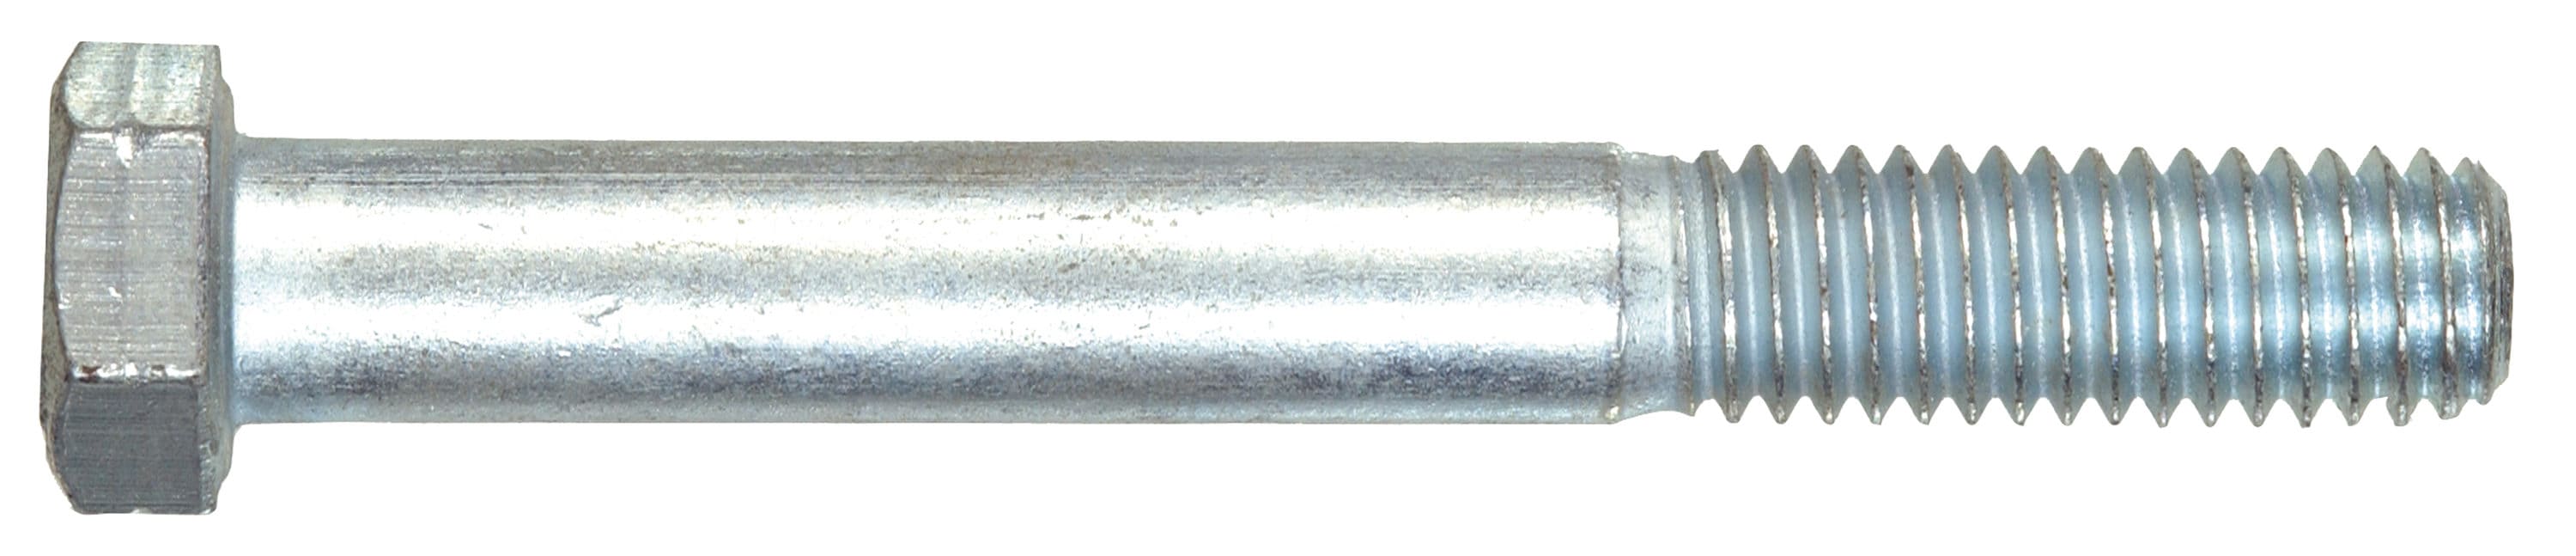 x 5" Fully Threaded Hex Tap Bolt A307 Grade A, Zinc Plated Steel (Quantity: 25) Coarse Thread, 8-16 x 5" - 4